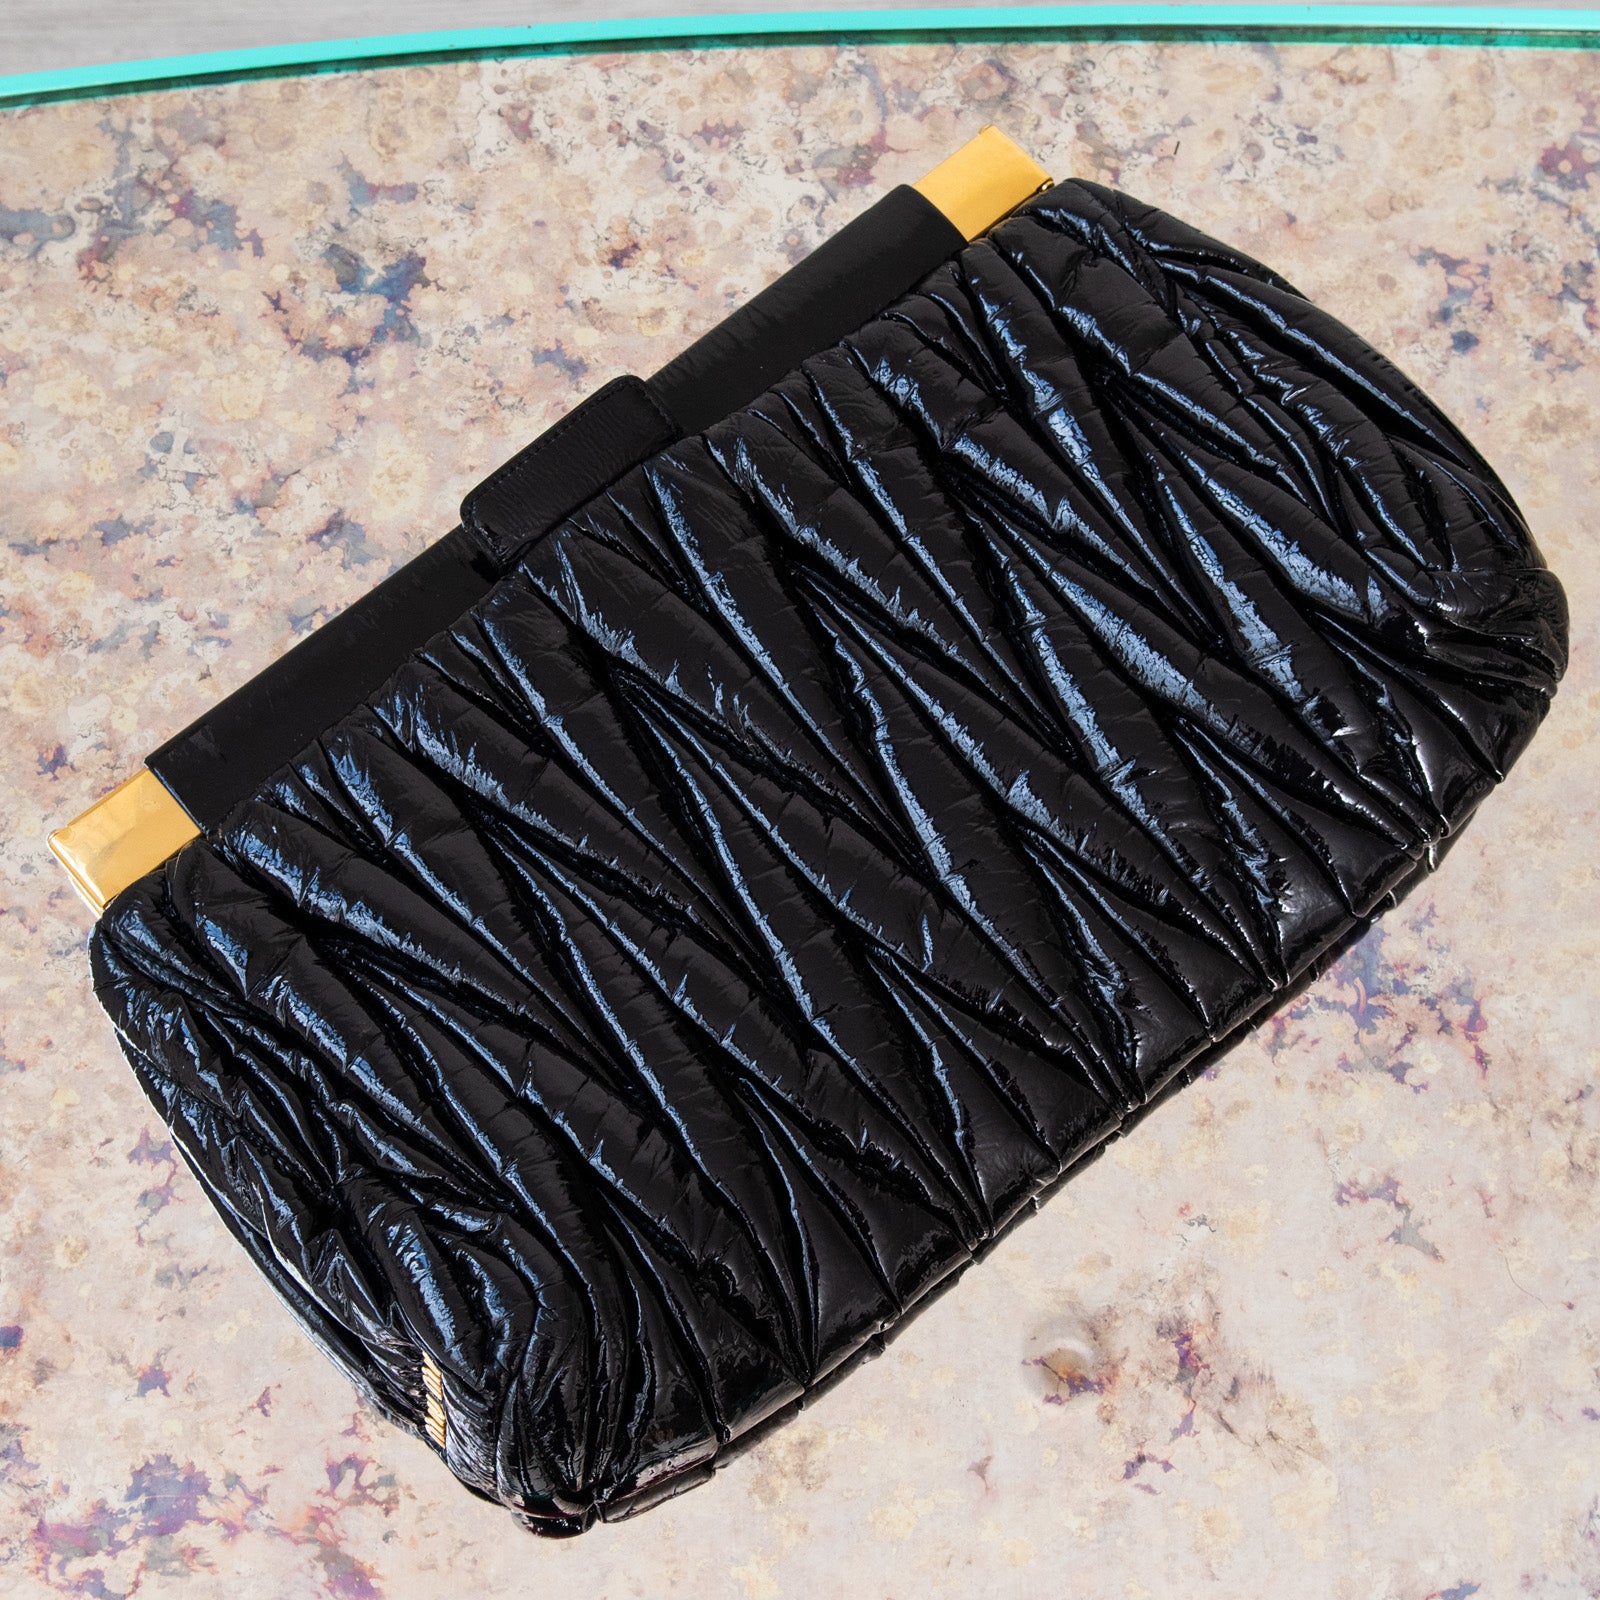 Miu Miu Oversized Black Patent Clutch Bag - Image 2 of 6